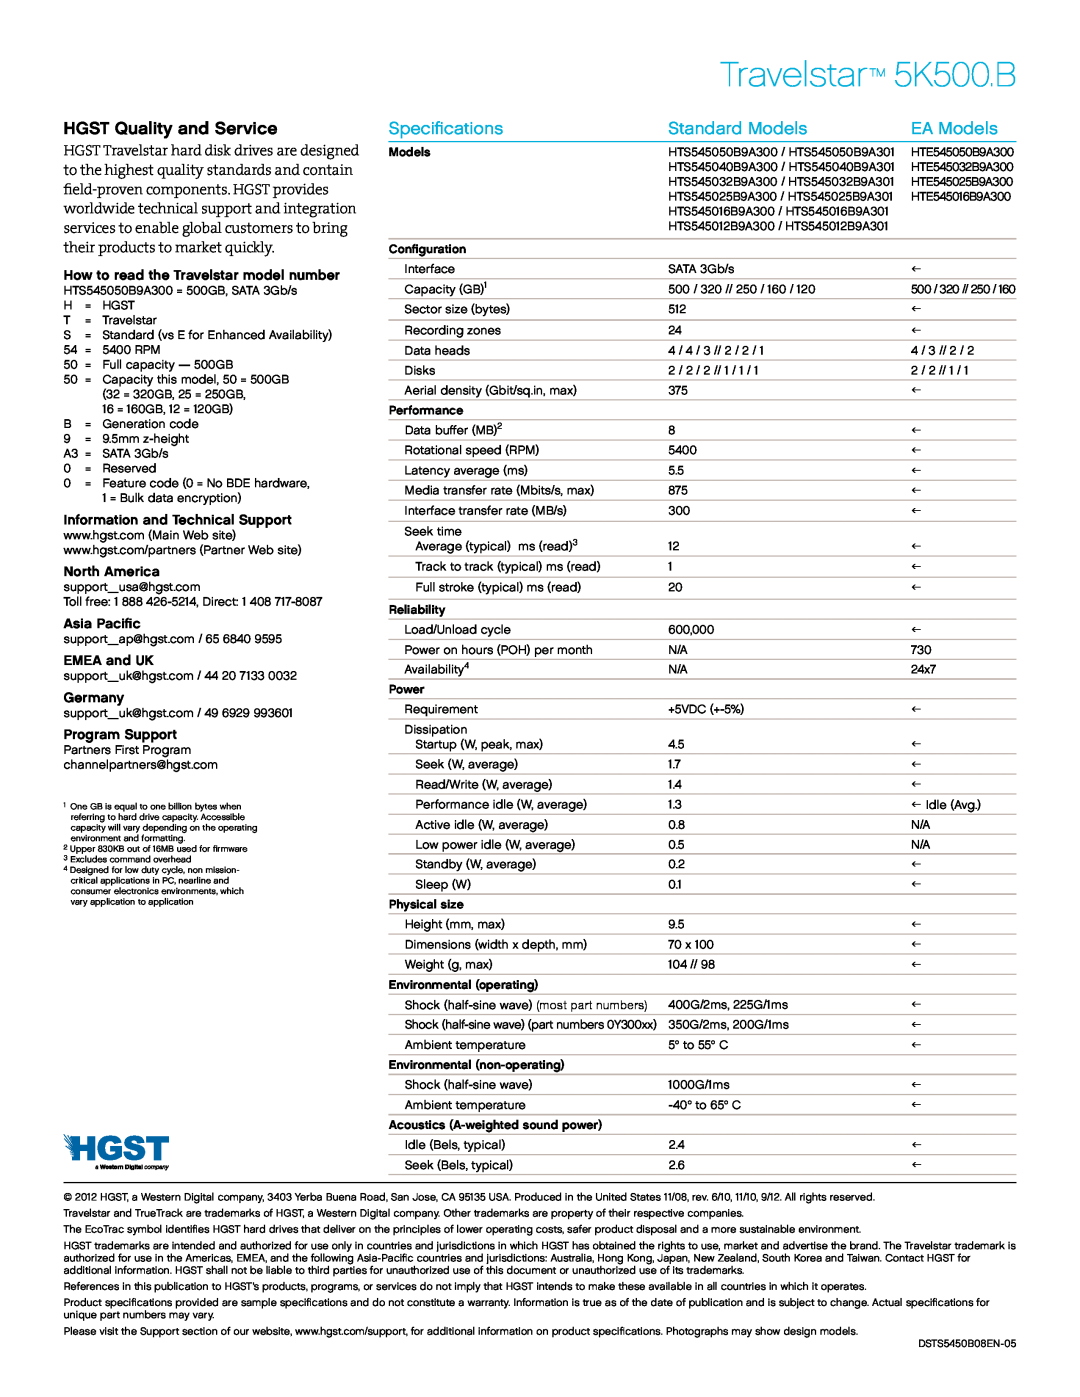 Hitachi 5K500B, HTS543225L9SA00 HGST Quality and Service, Specifications, Standard Models, EA Models, Travelstar 5K500.B 